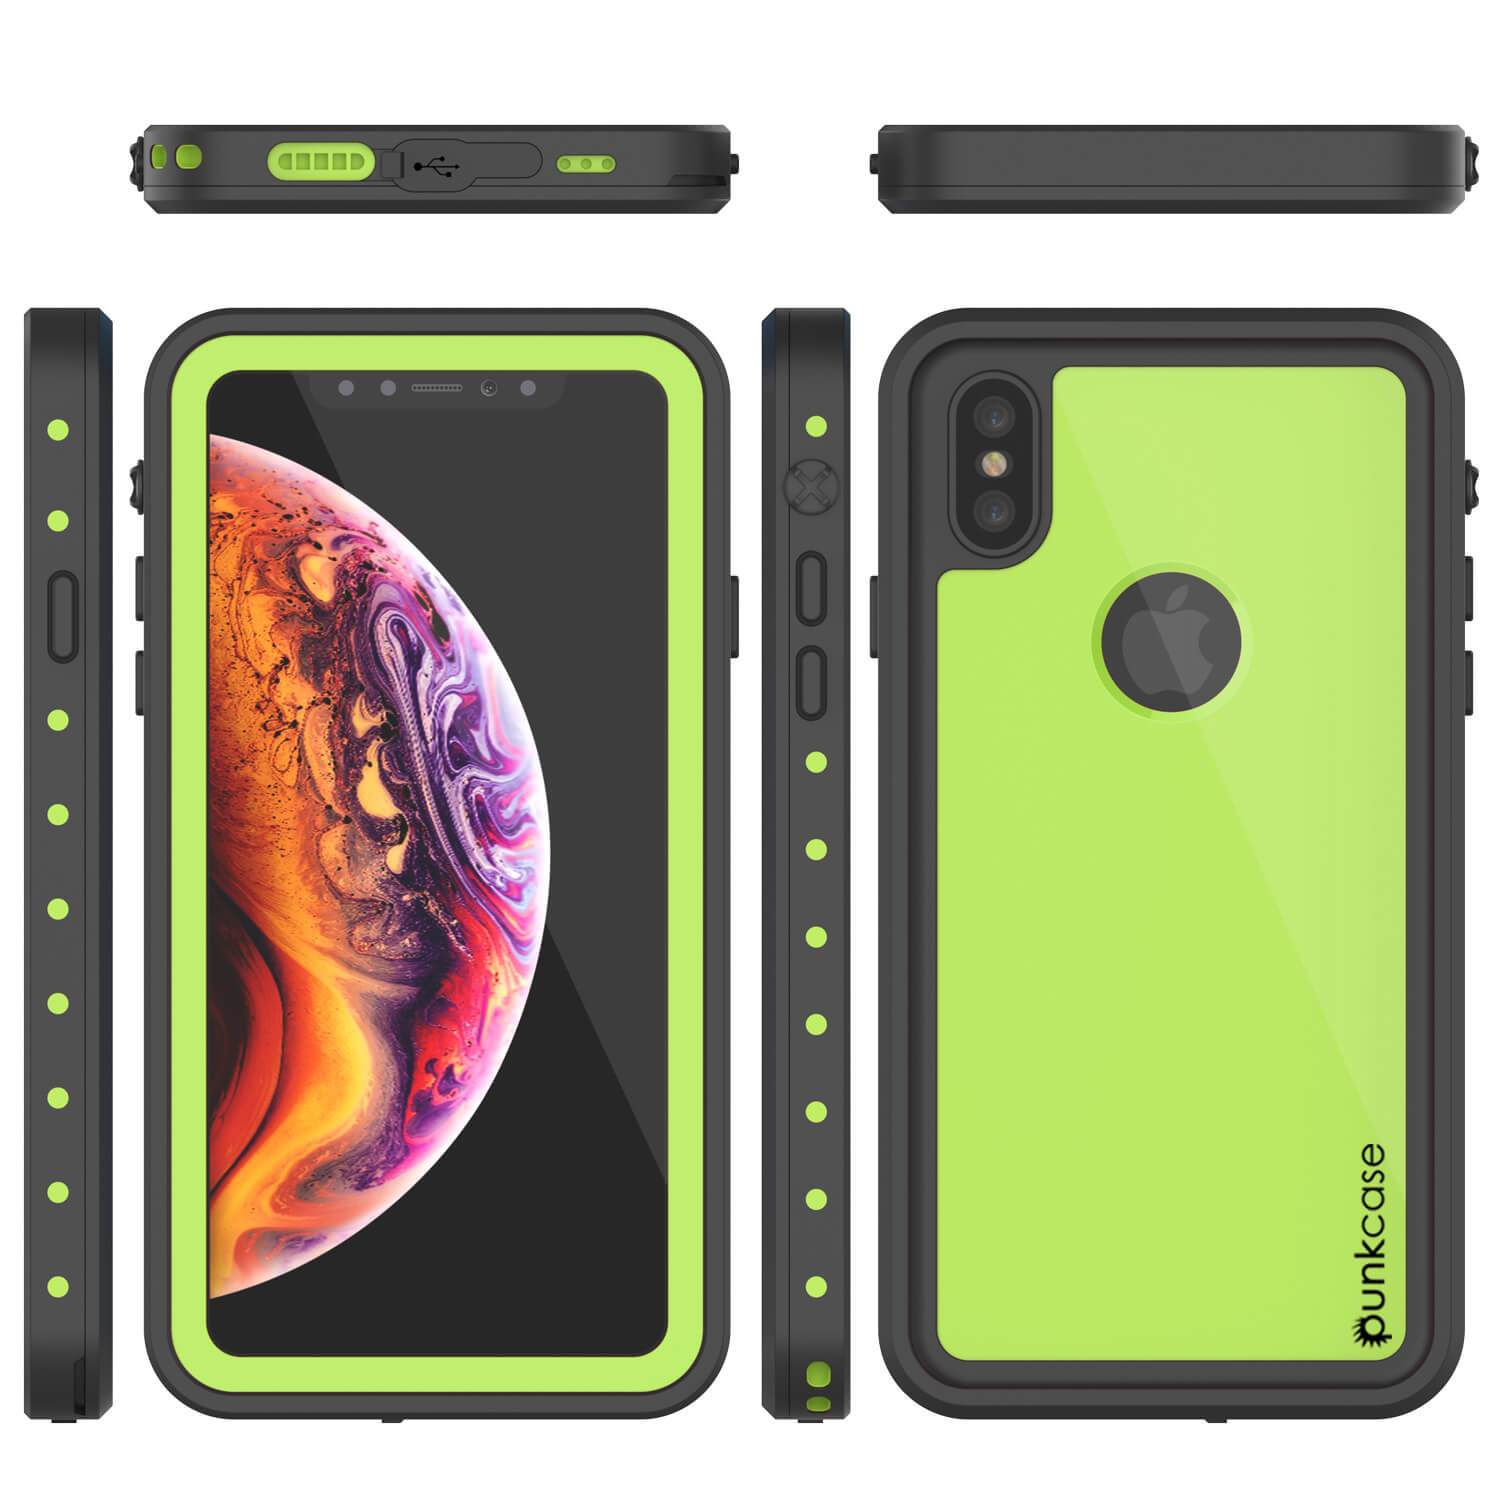 iPhone XS Waterproof IP68 Case, Punkcase [Light green] [StudStar Series] [Slim Fit] [Dirtproof]